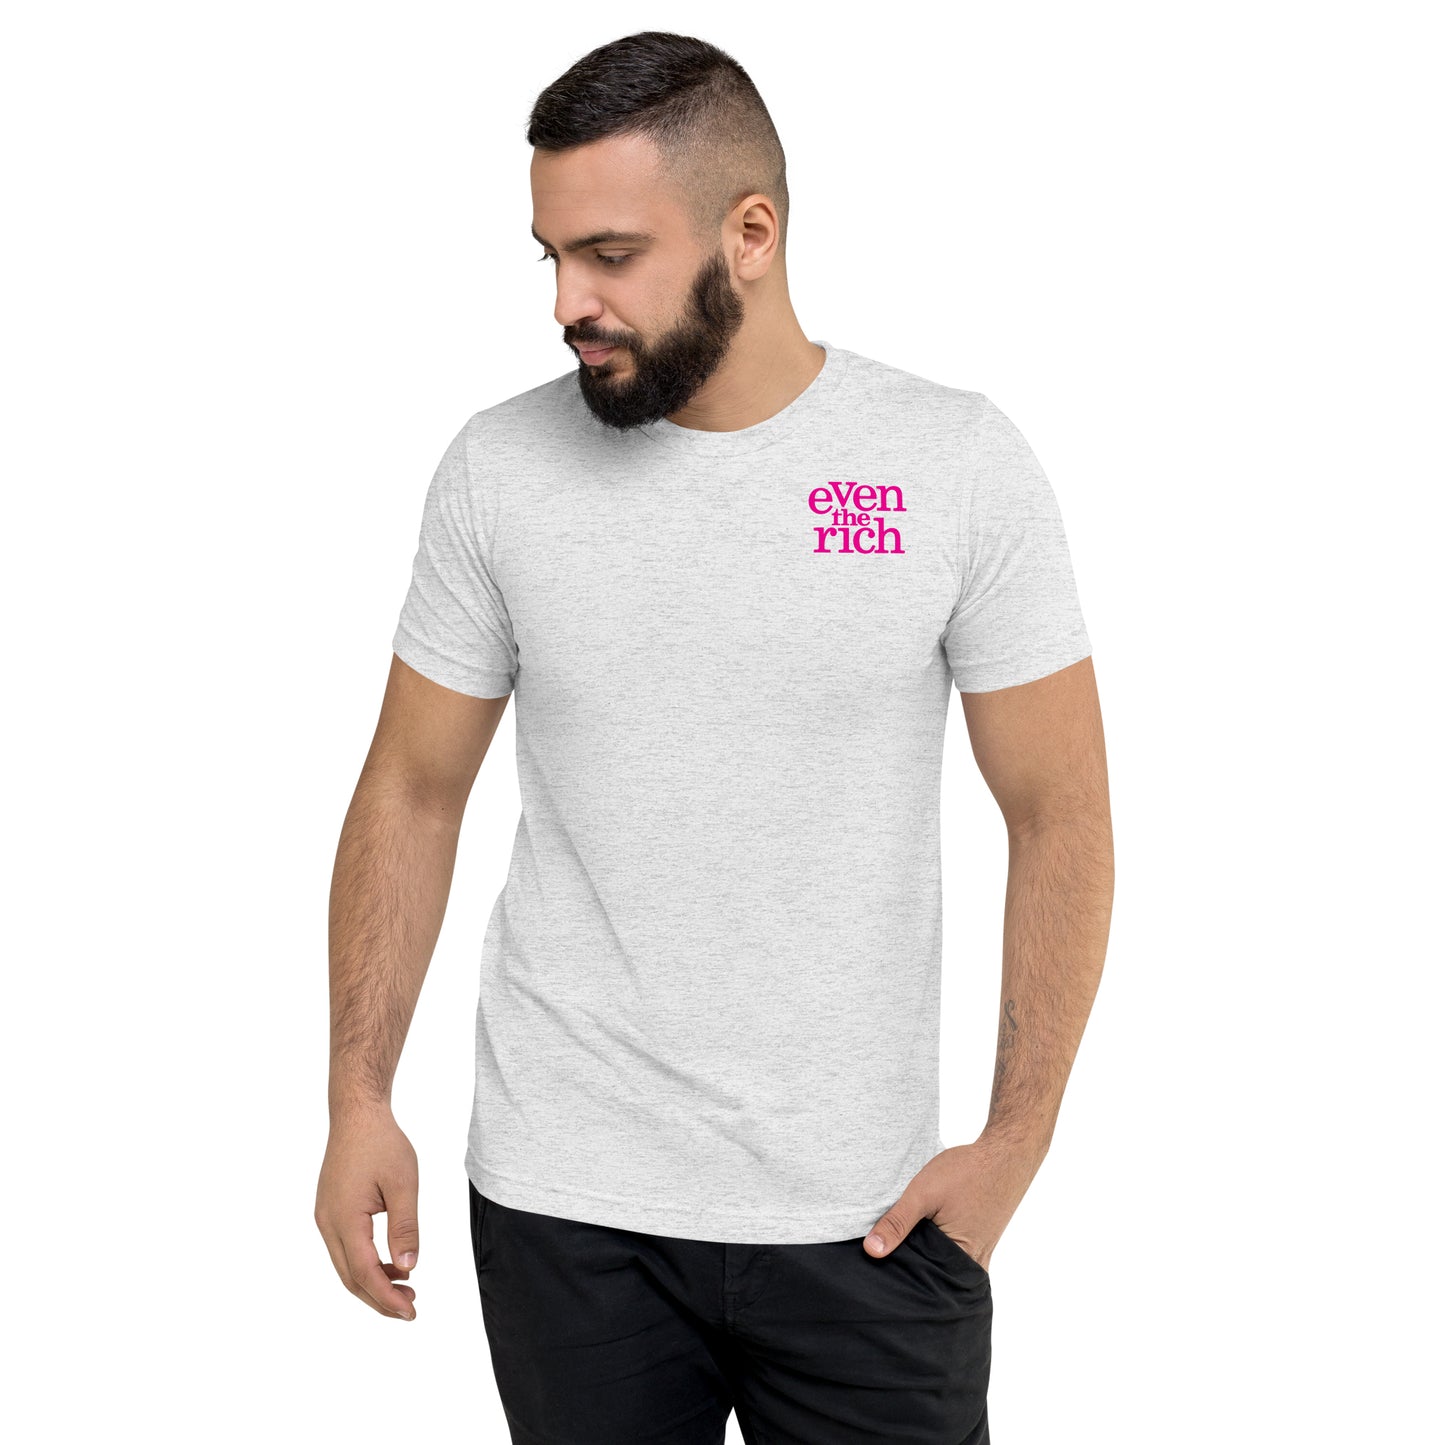 Even the Rich Logo Adult Tri-Blend T-Shirt